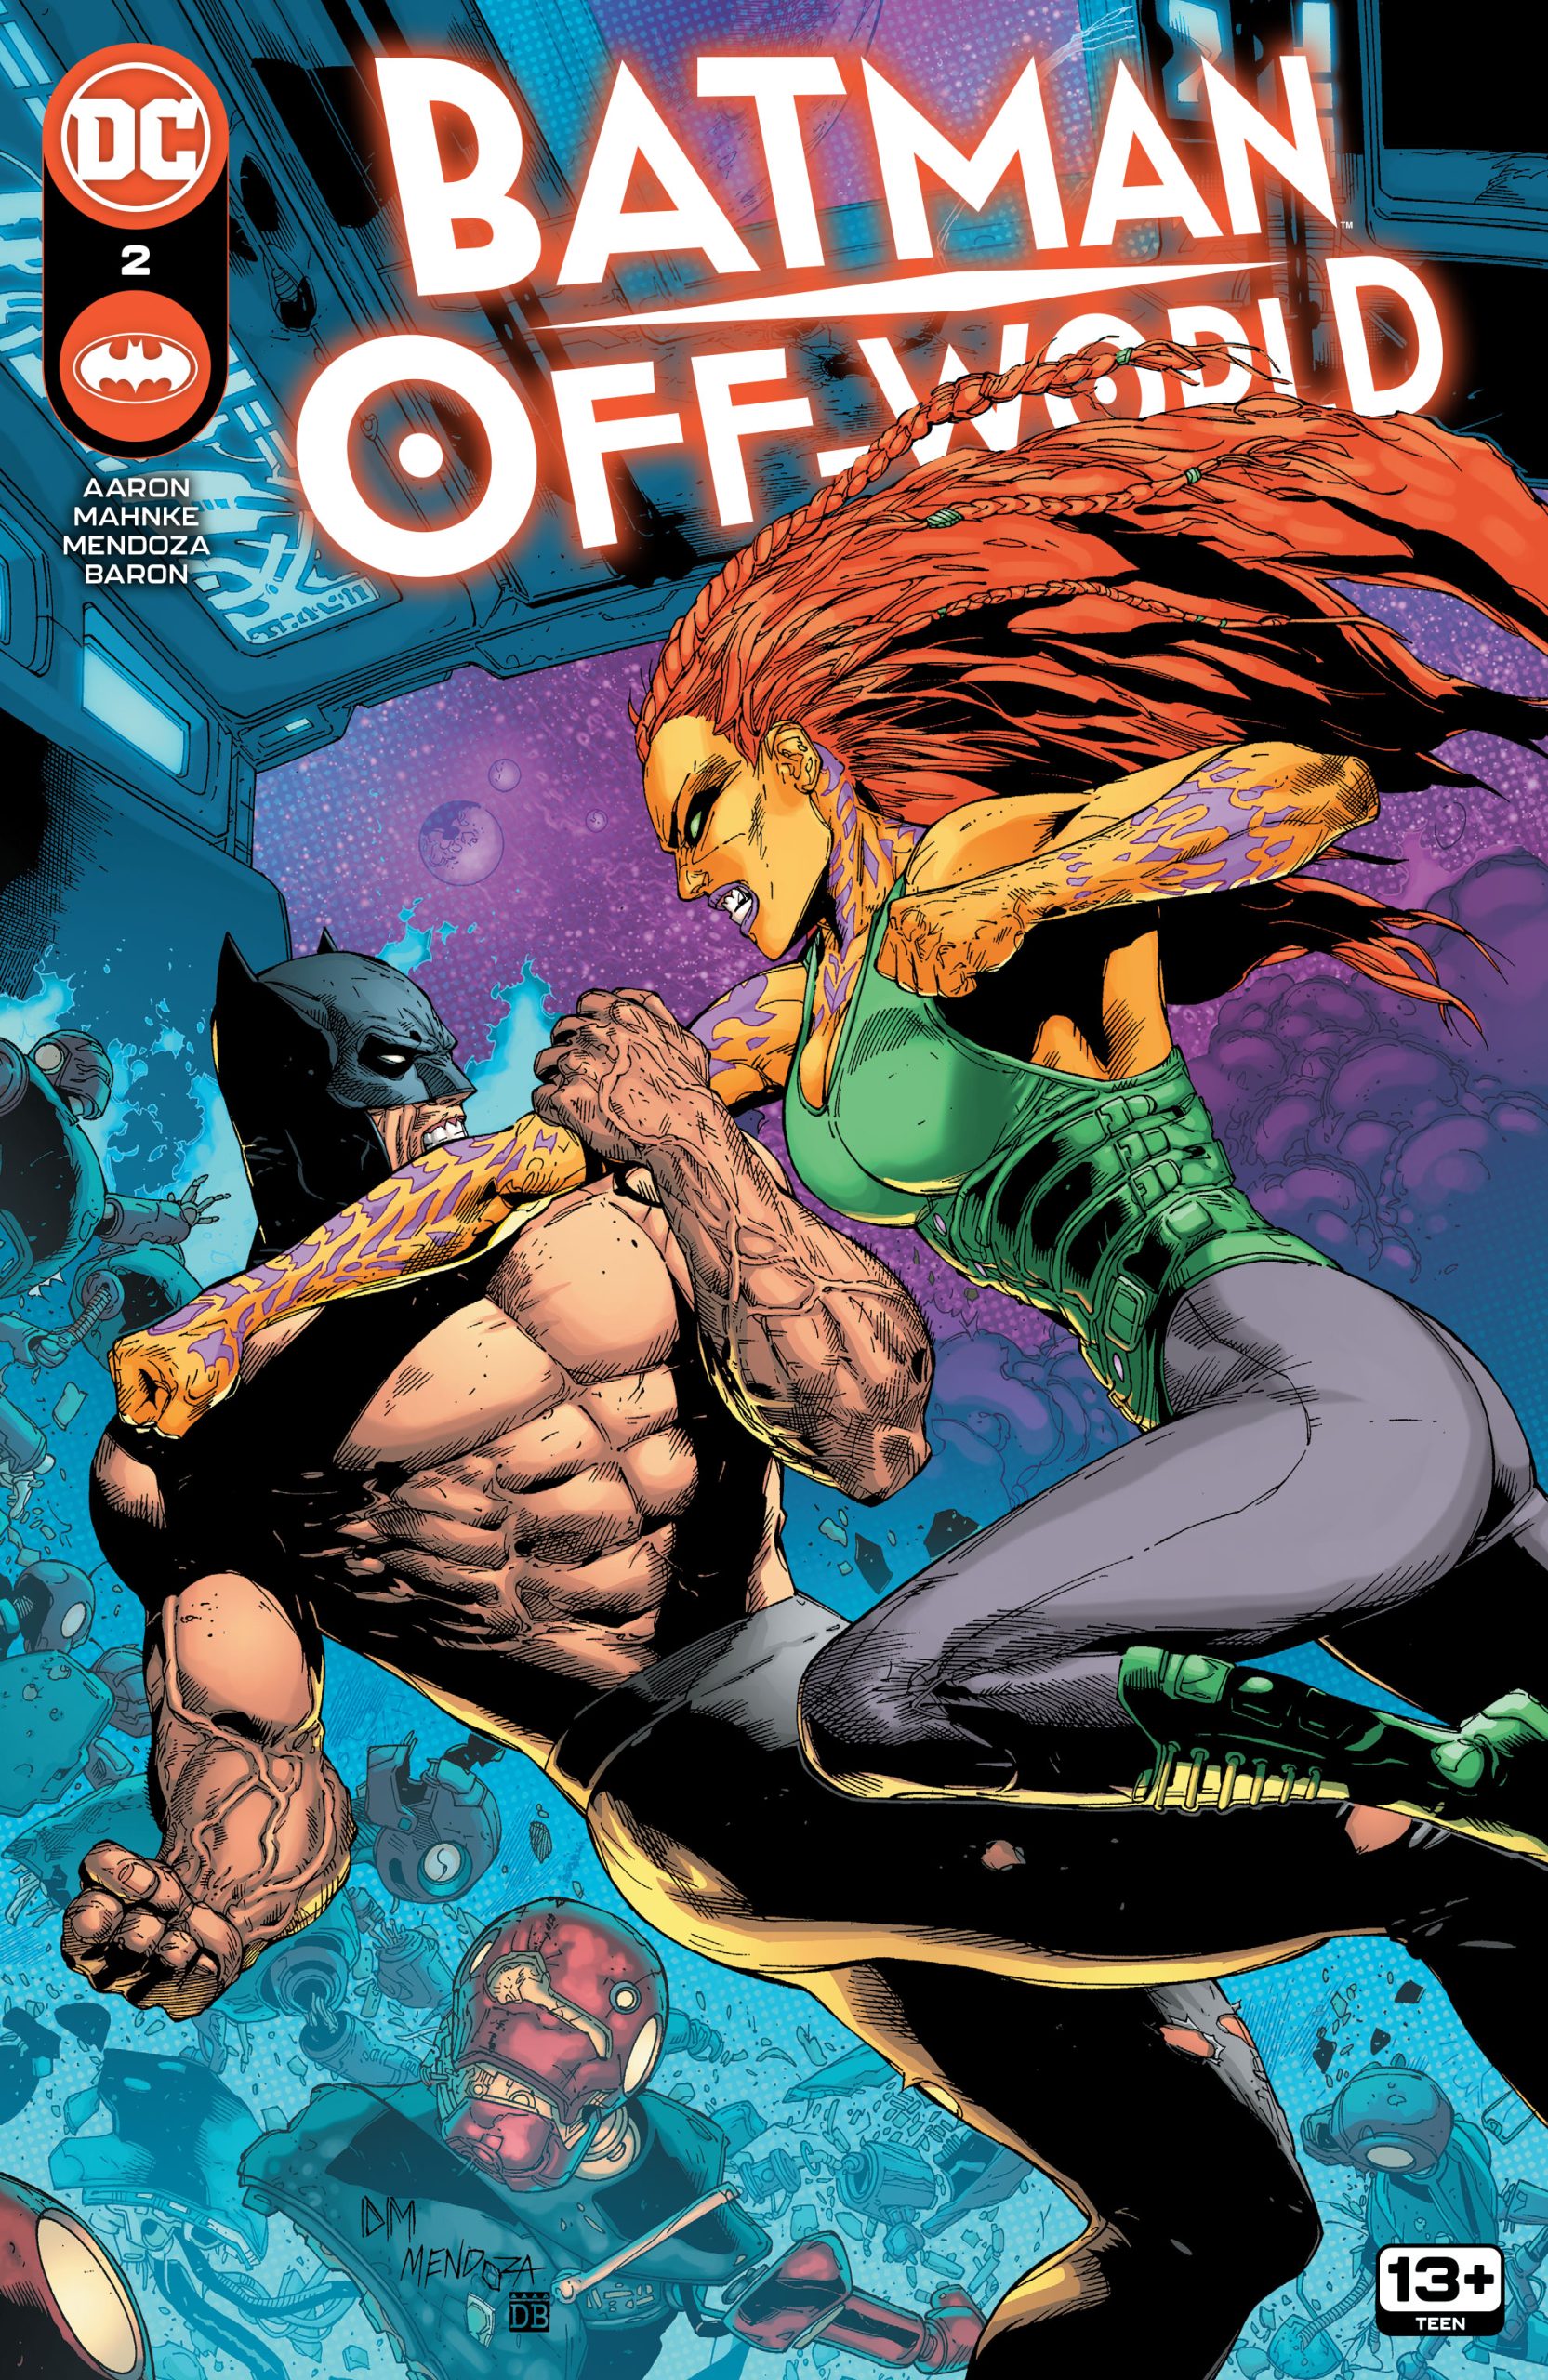 DC Preview: Batman: Off-World #2